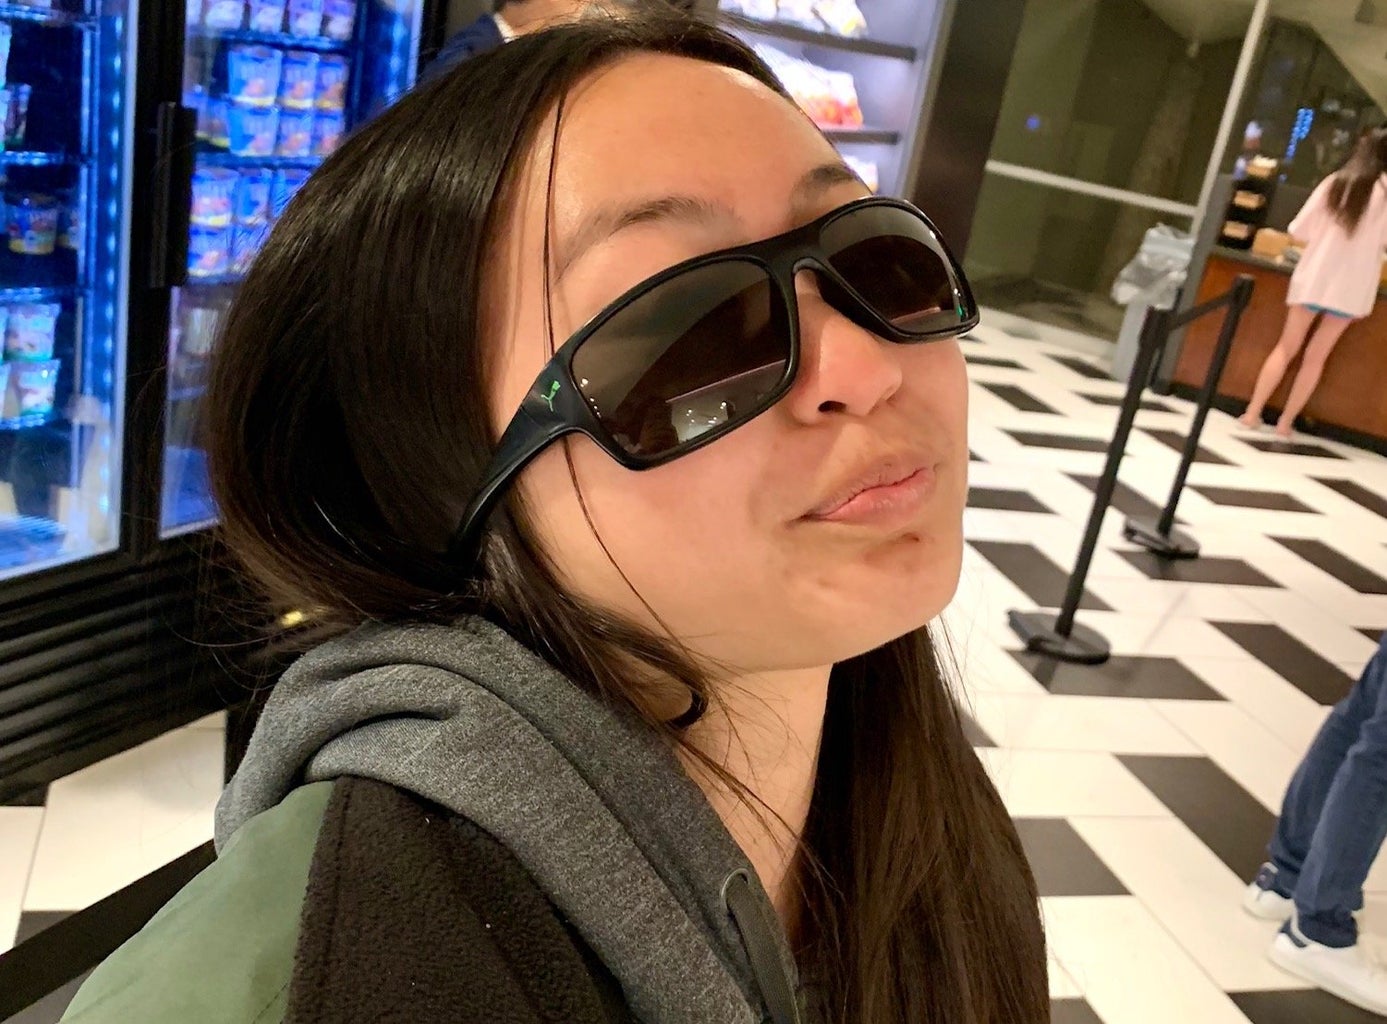 Ashley at the study sunglasses